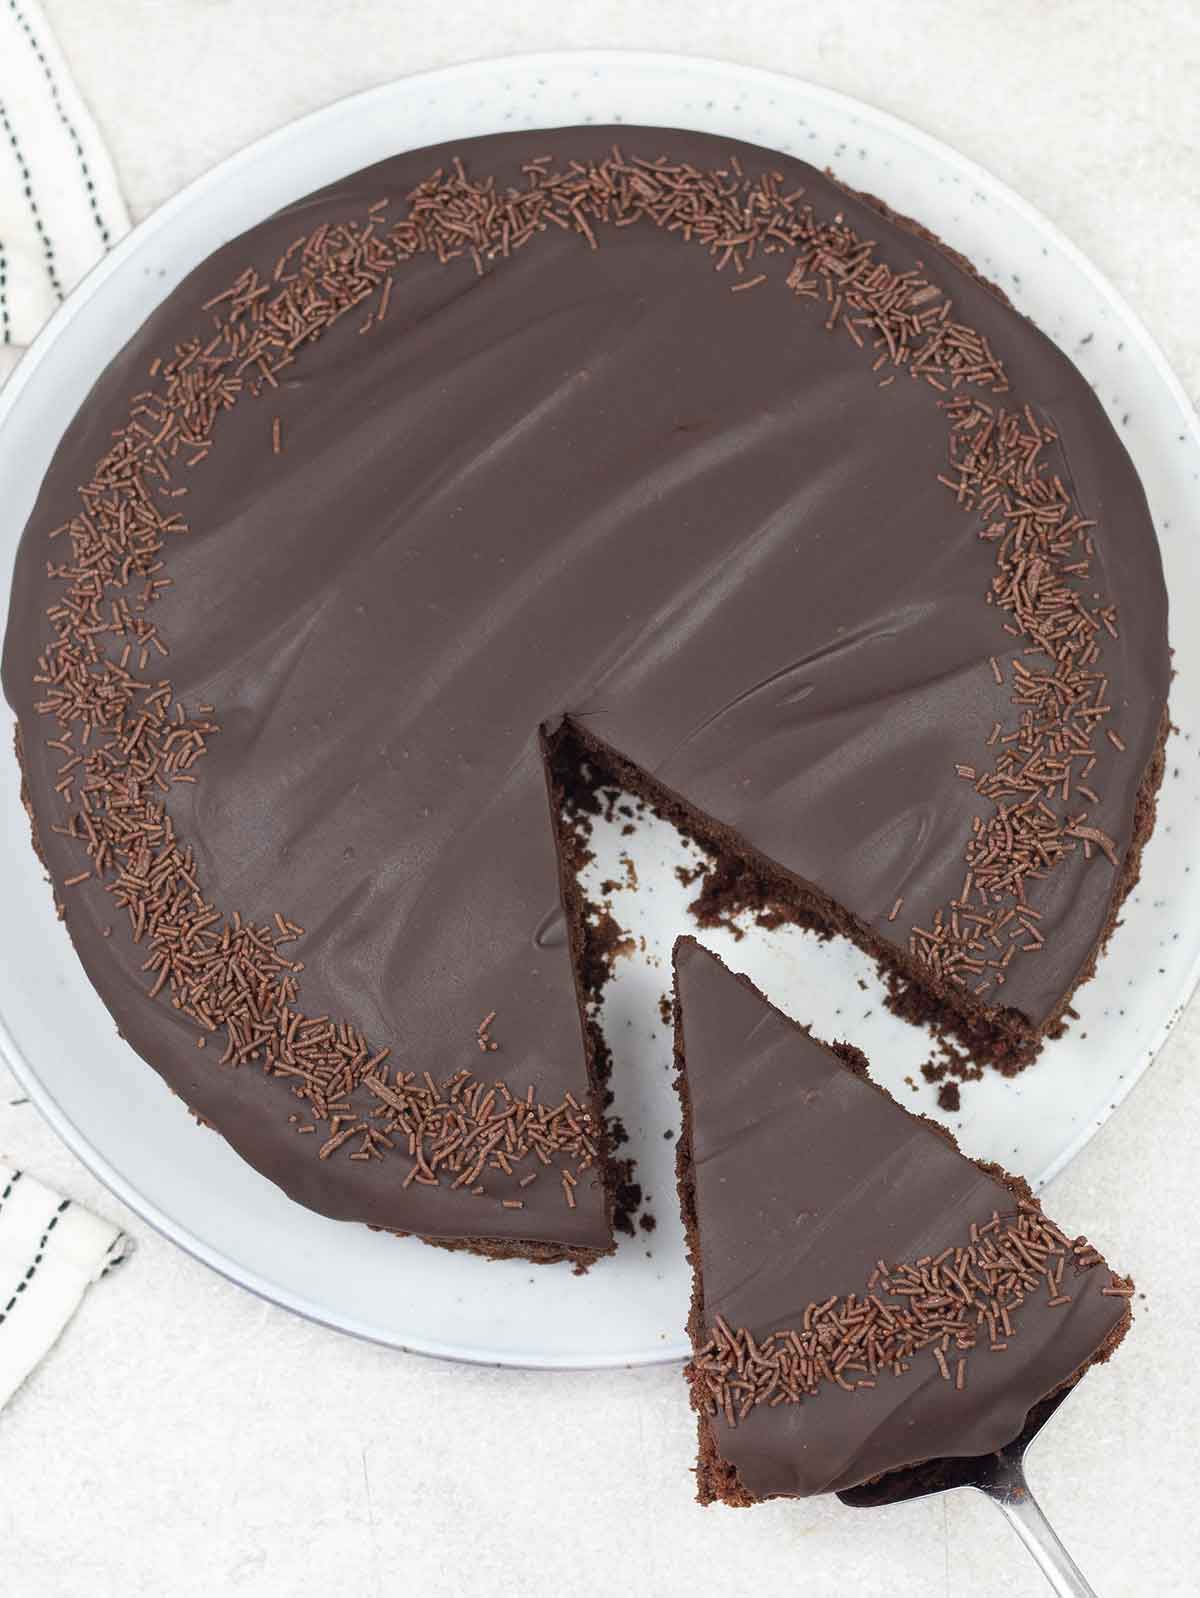 Microwave chocolate cake topped with chocolate ganache.